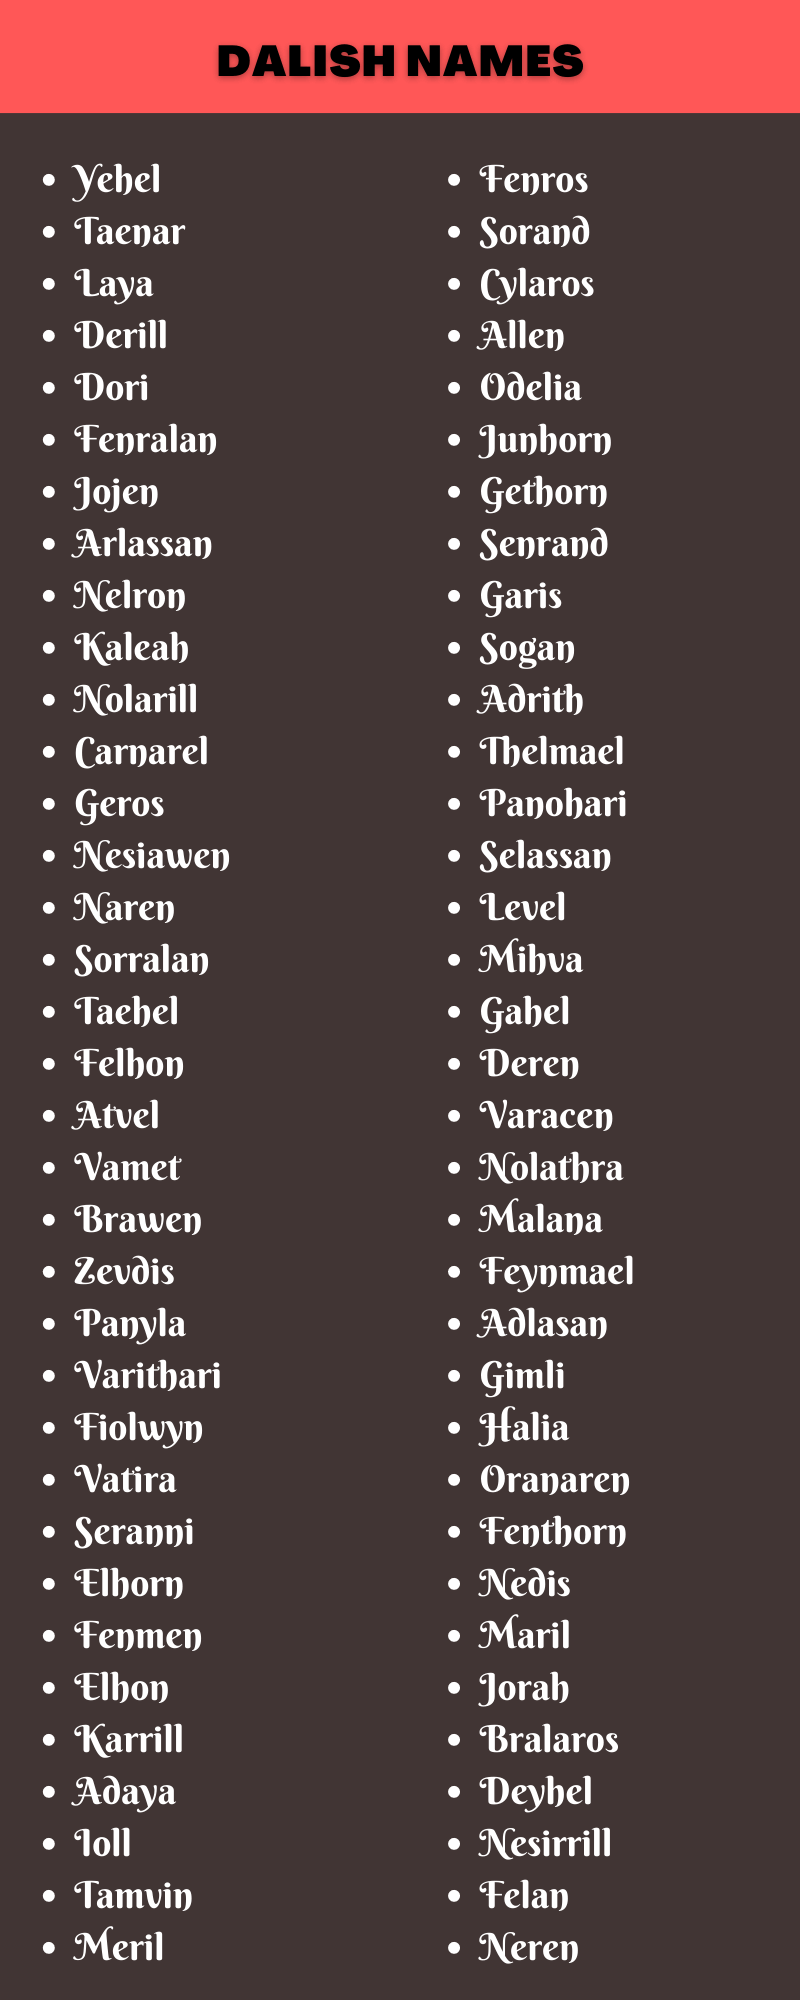 Dalish Names